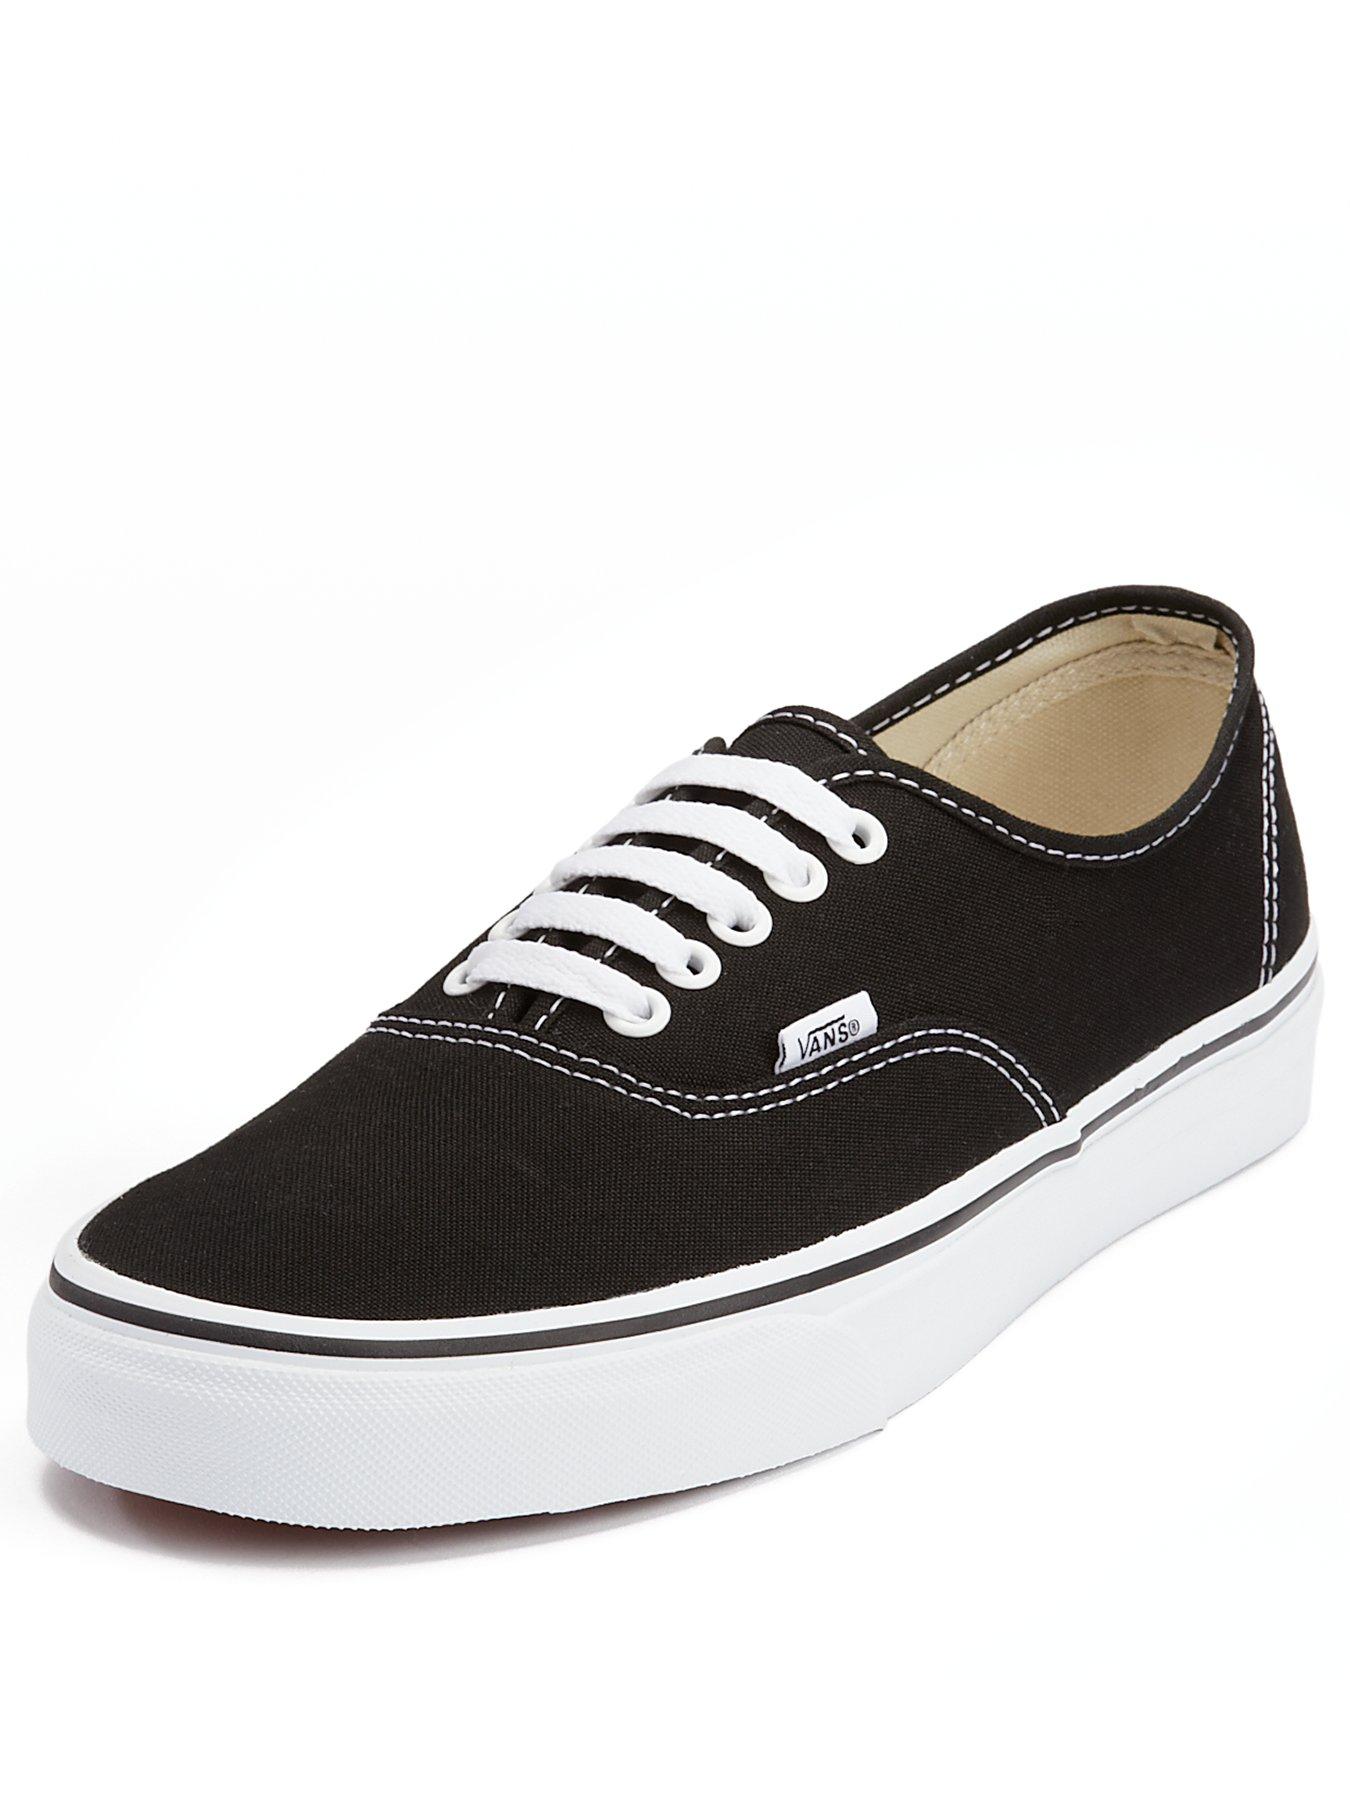 Vans Shoes \u0026 Clothing | Online Store 